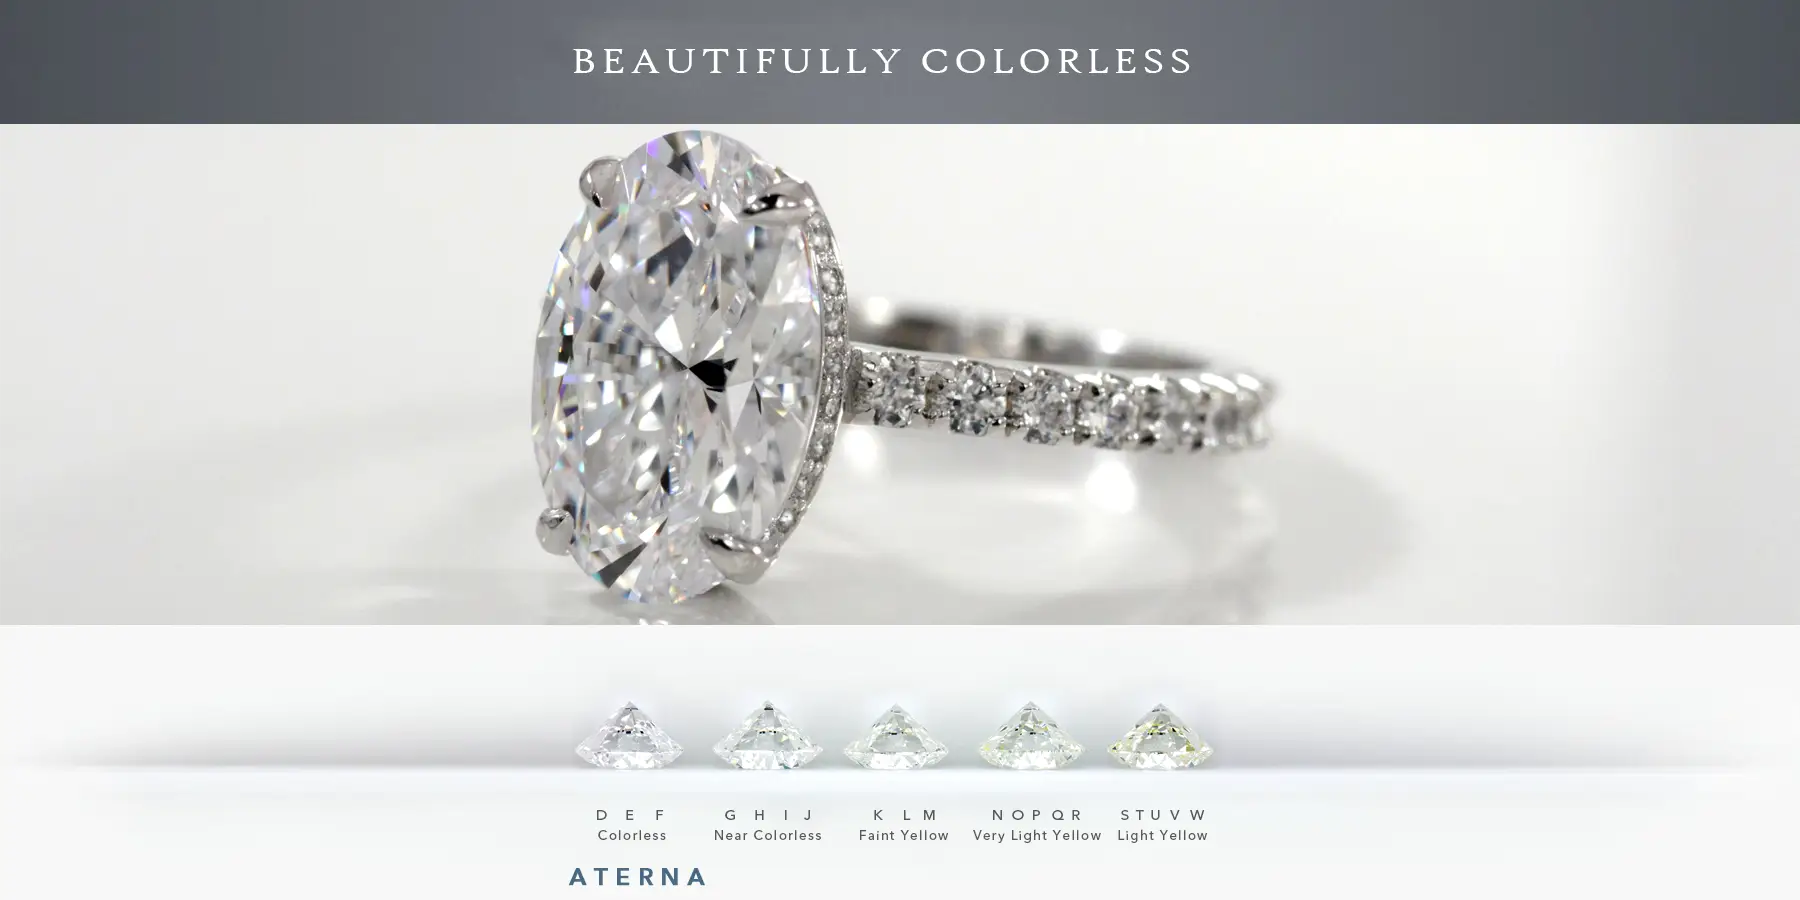 aterna moissanite diamonds are colorless and sparkle like a diamond